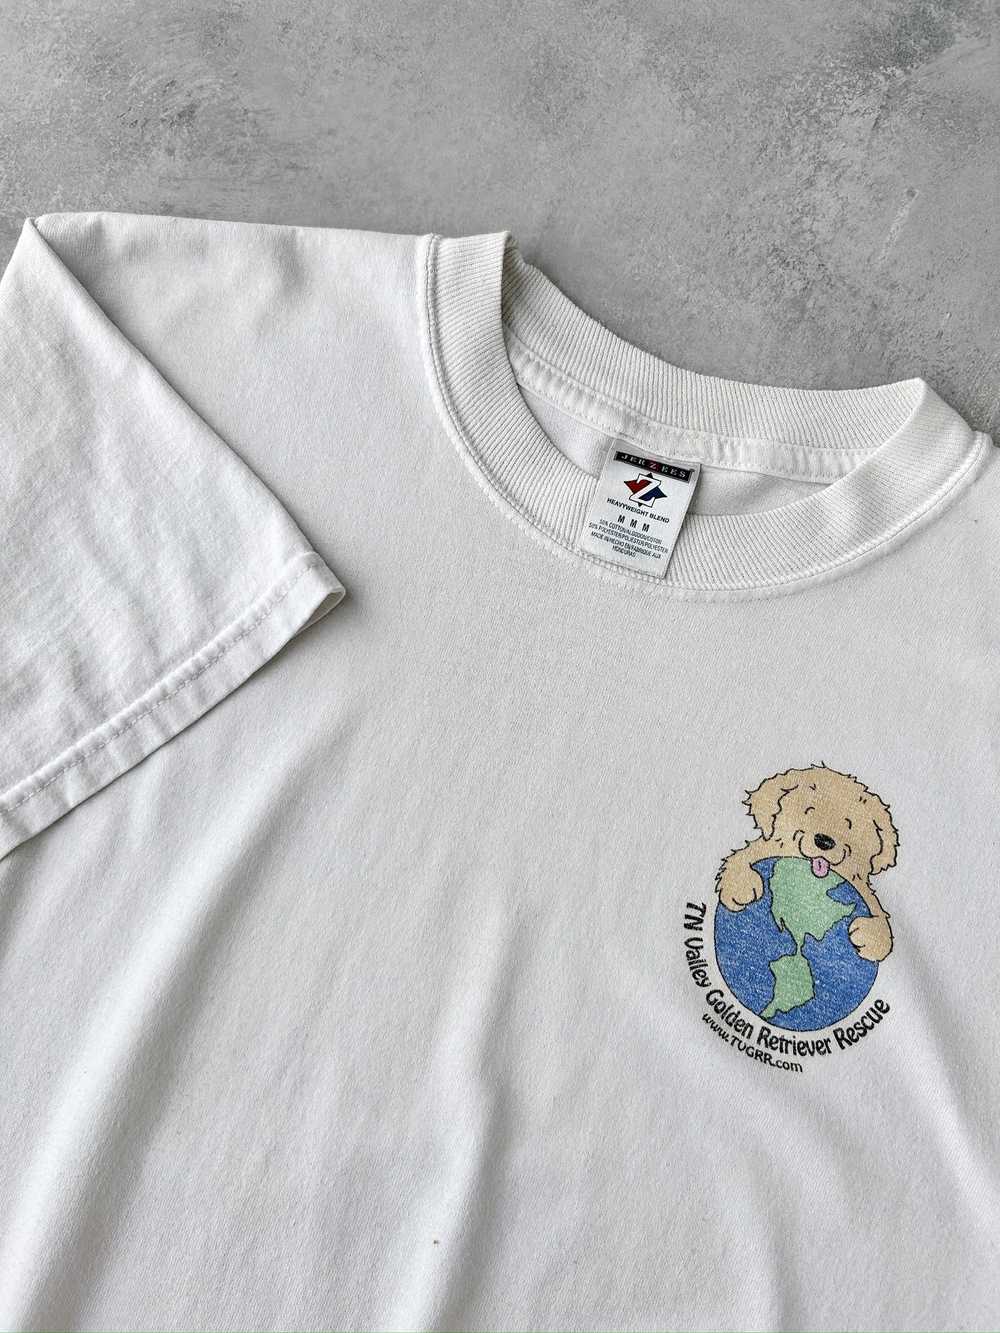 Golden Retriever Rescue T-Shirt 00's - Medium - image 2